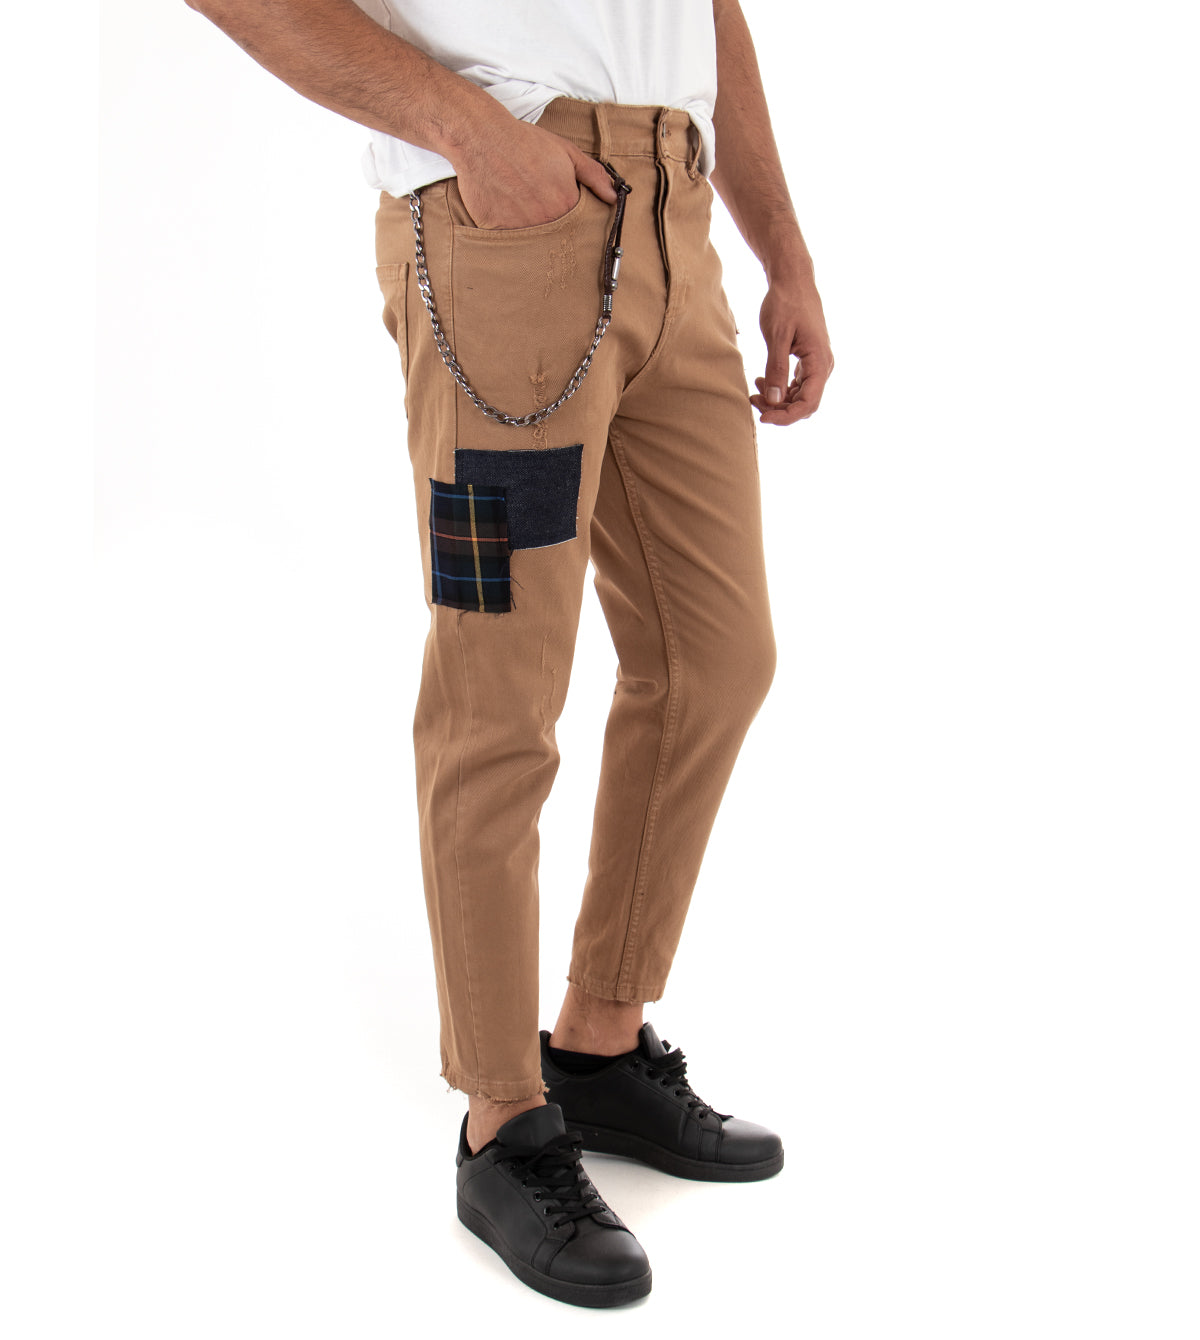 Pantaloni Jeans Uomo Slim Fit Camel Rotture Abrasioni Cinque Tasche Casual GIOSAL-P3318A